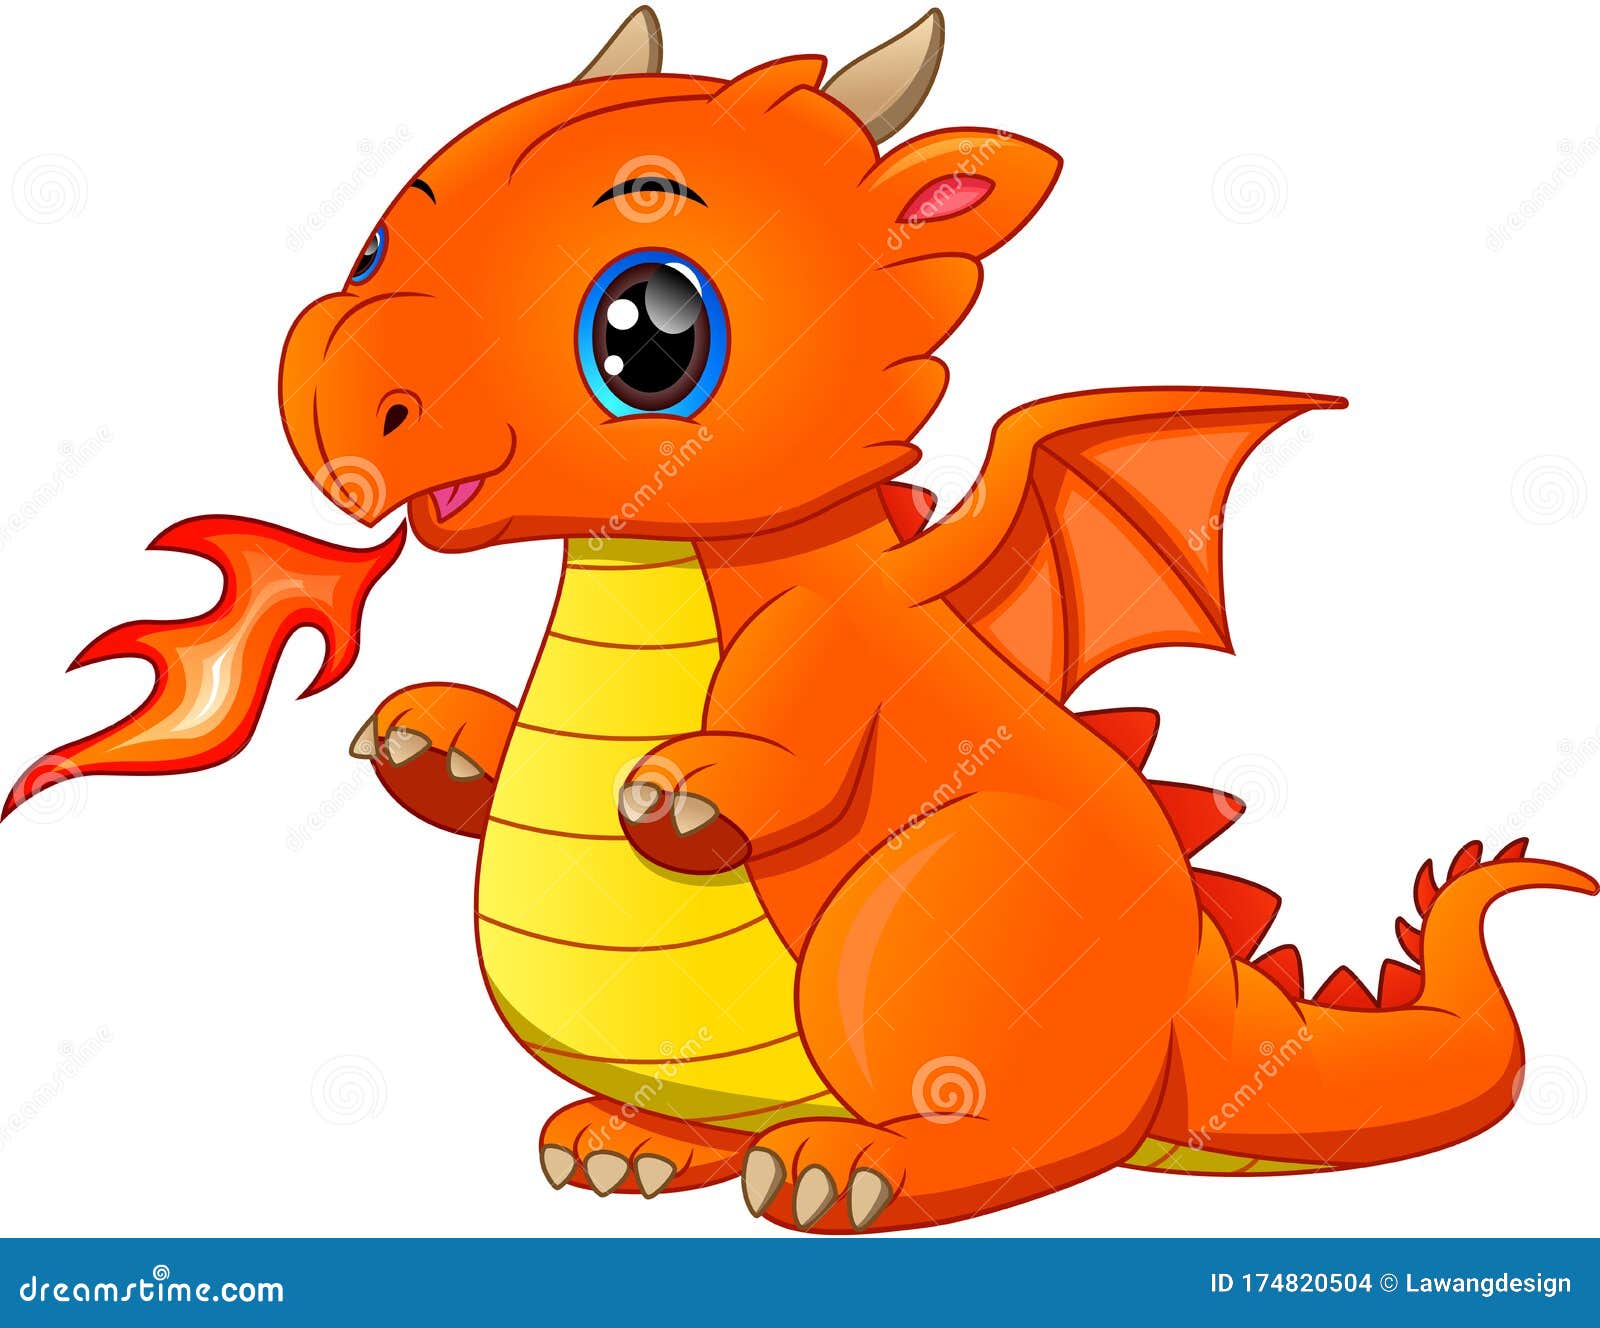 Vector illustration of cute baby dragon cartoon